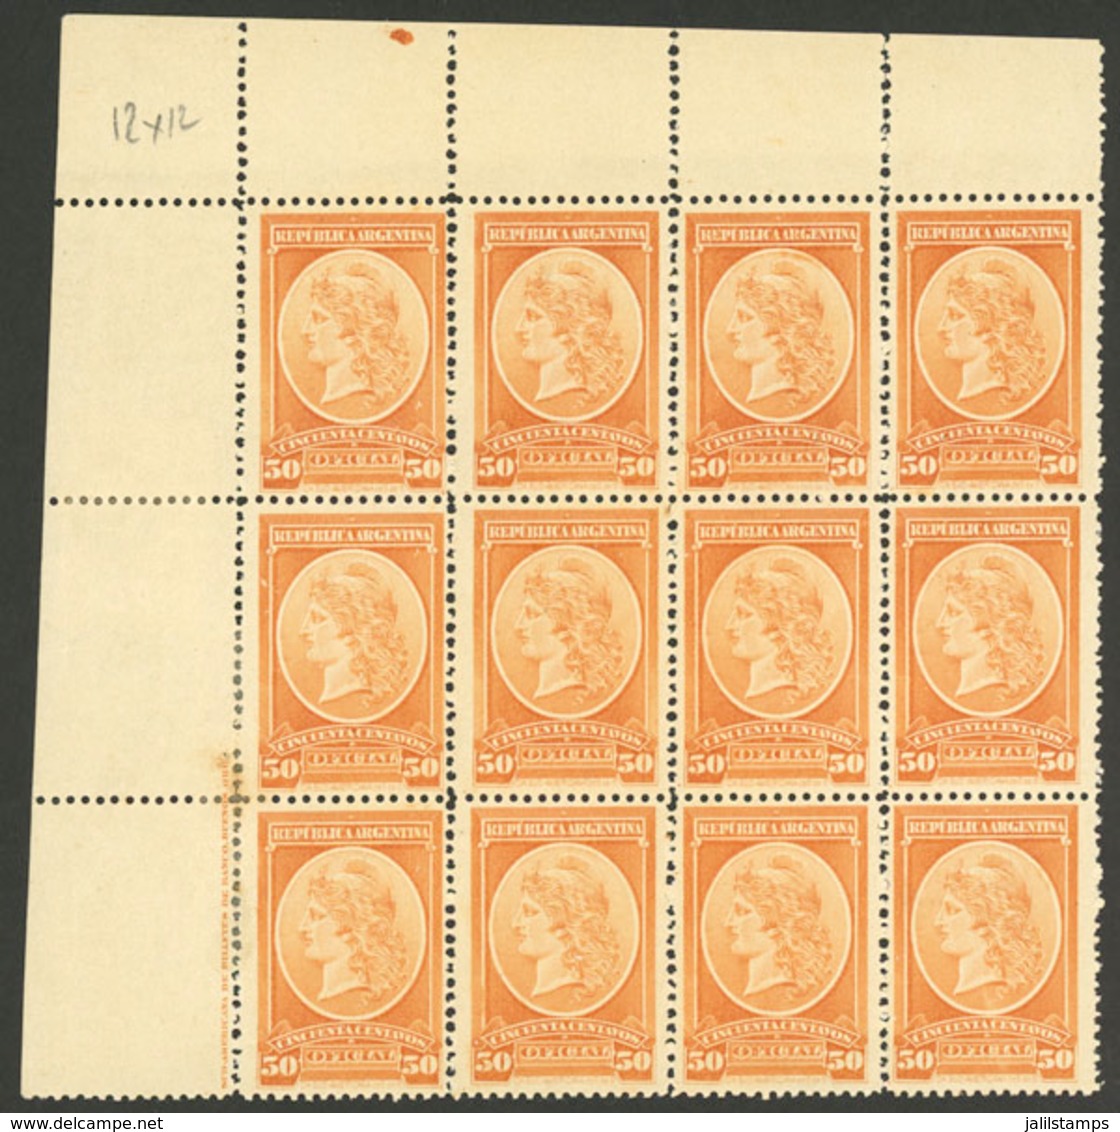 ARGENTINA: GJ.45, 1901 Liberty Head 30c. Perf 12¼, Large Corner Block Of 12, Mint Without Gum, Excellent Quality, Possib - Dienstzegels